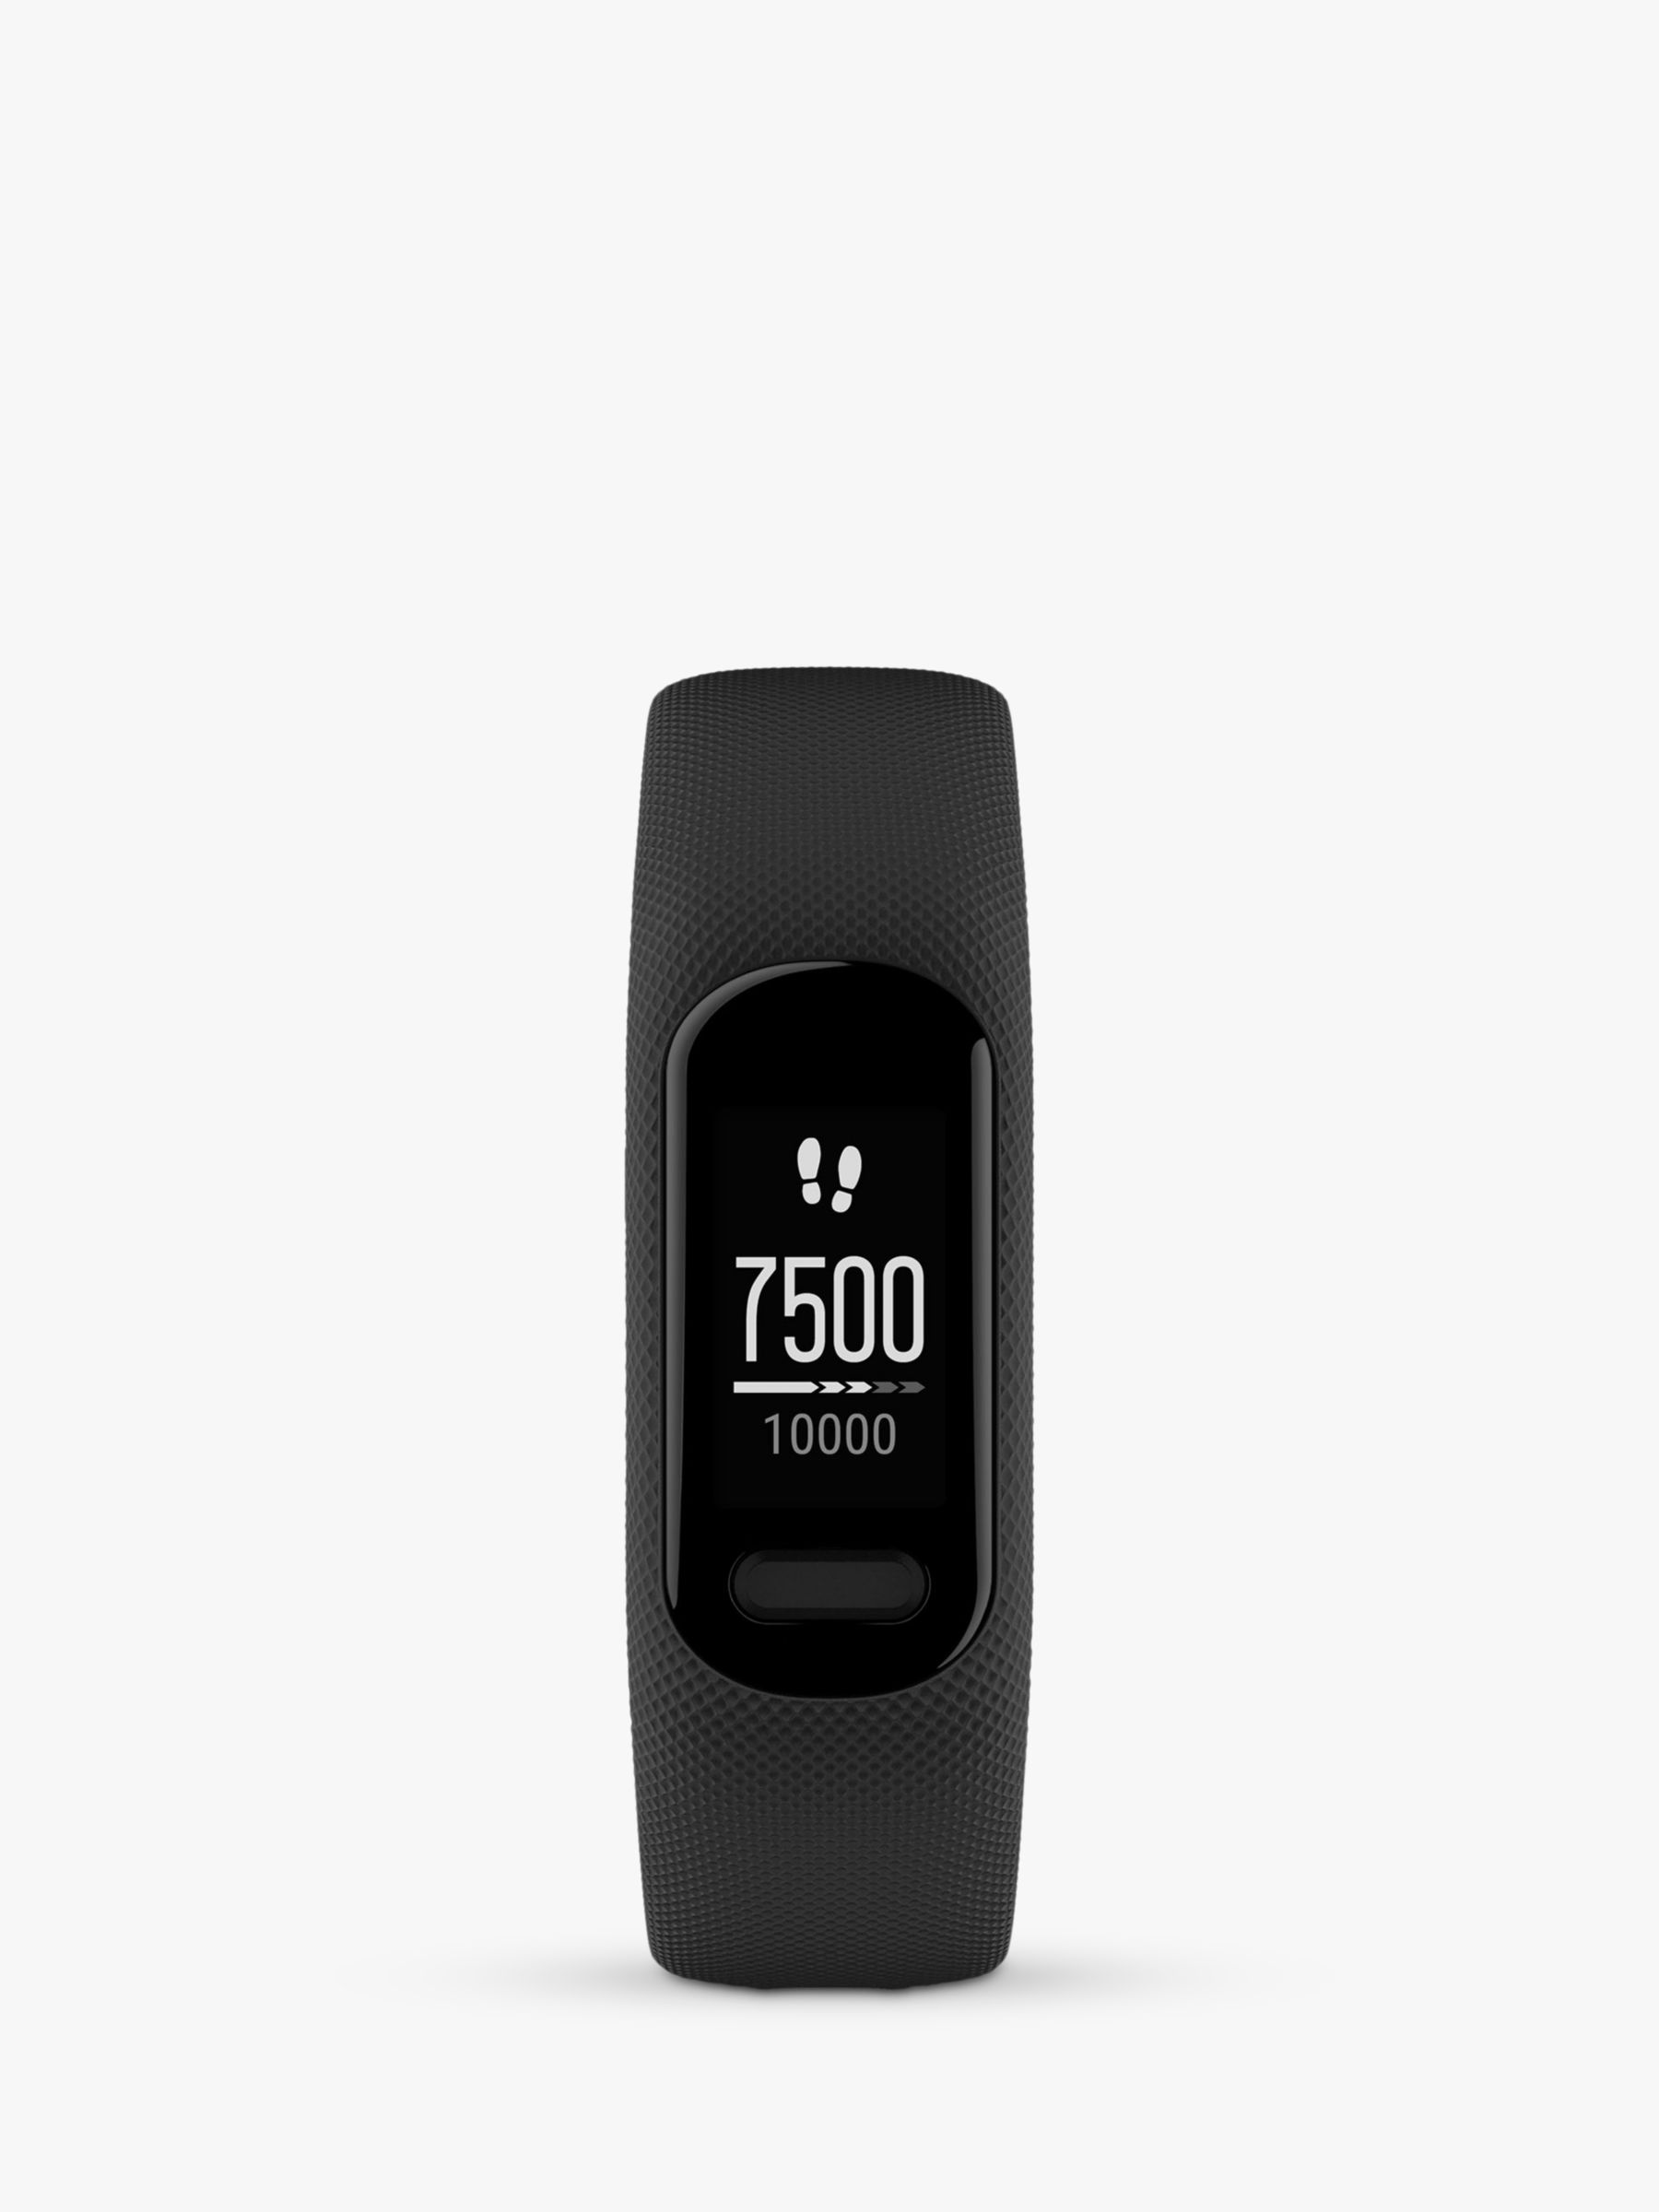 Garmin vivosmart 5 Fitness Activity Tracker with Wrist Based Heart Rate,  Small/Medium, Black